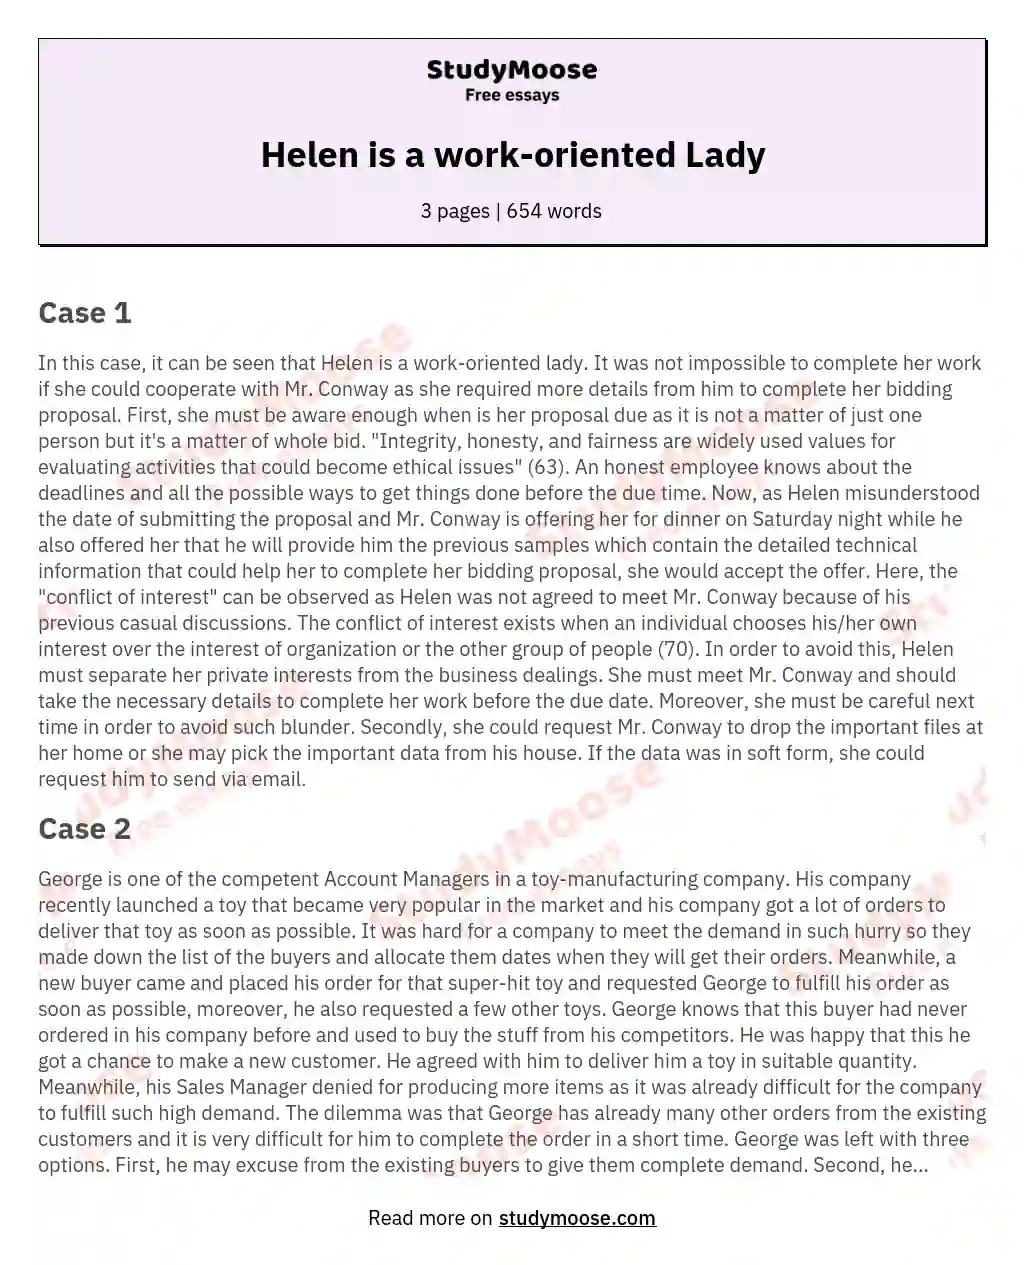 Helen is a work-oriented Lady essay